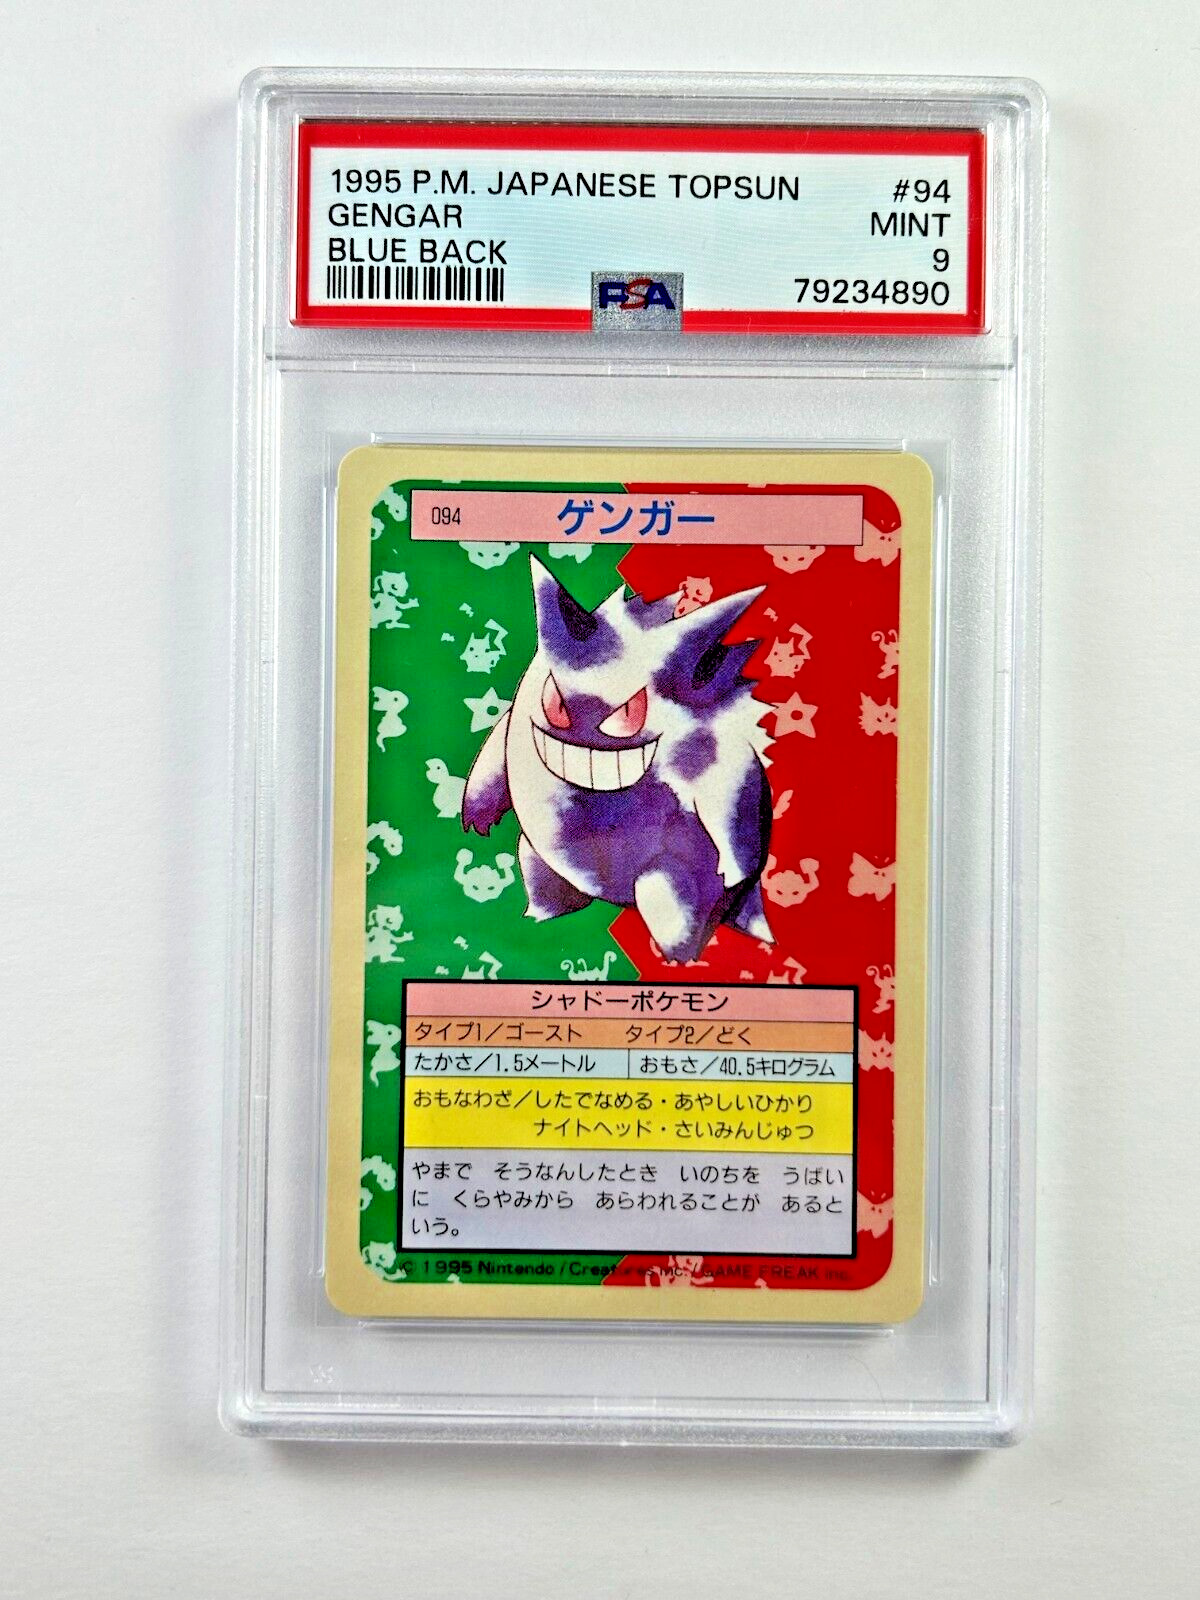 1995 Pokemon Gengar #94 Blue Back Topsun Japanese PSA 9 Vending Rare Card